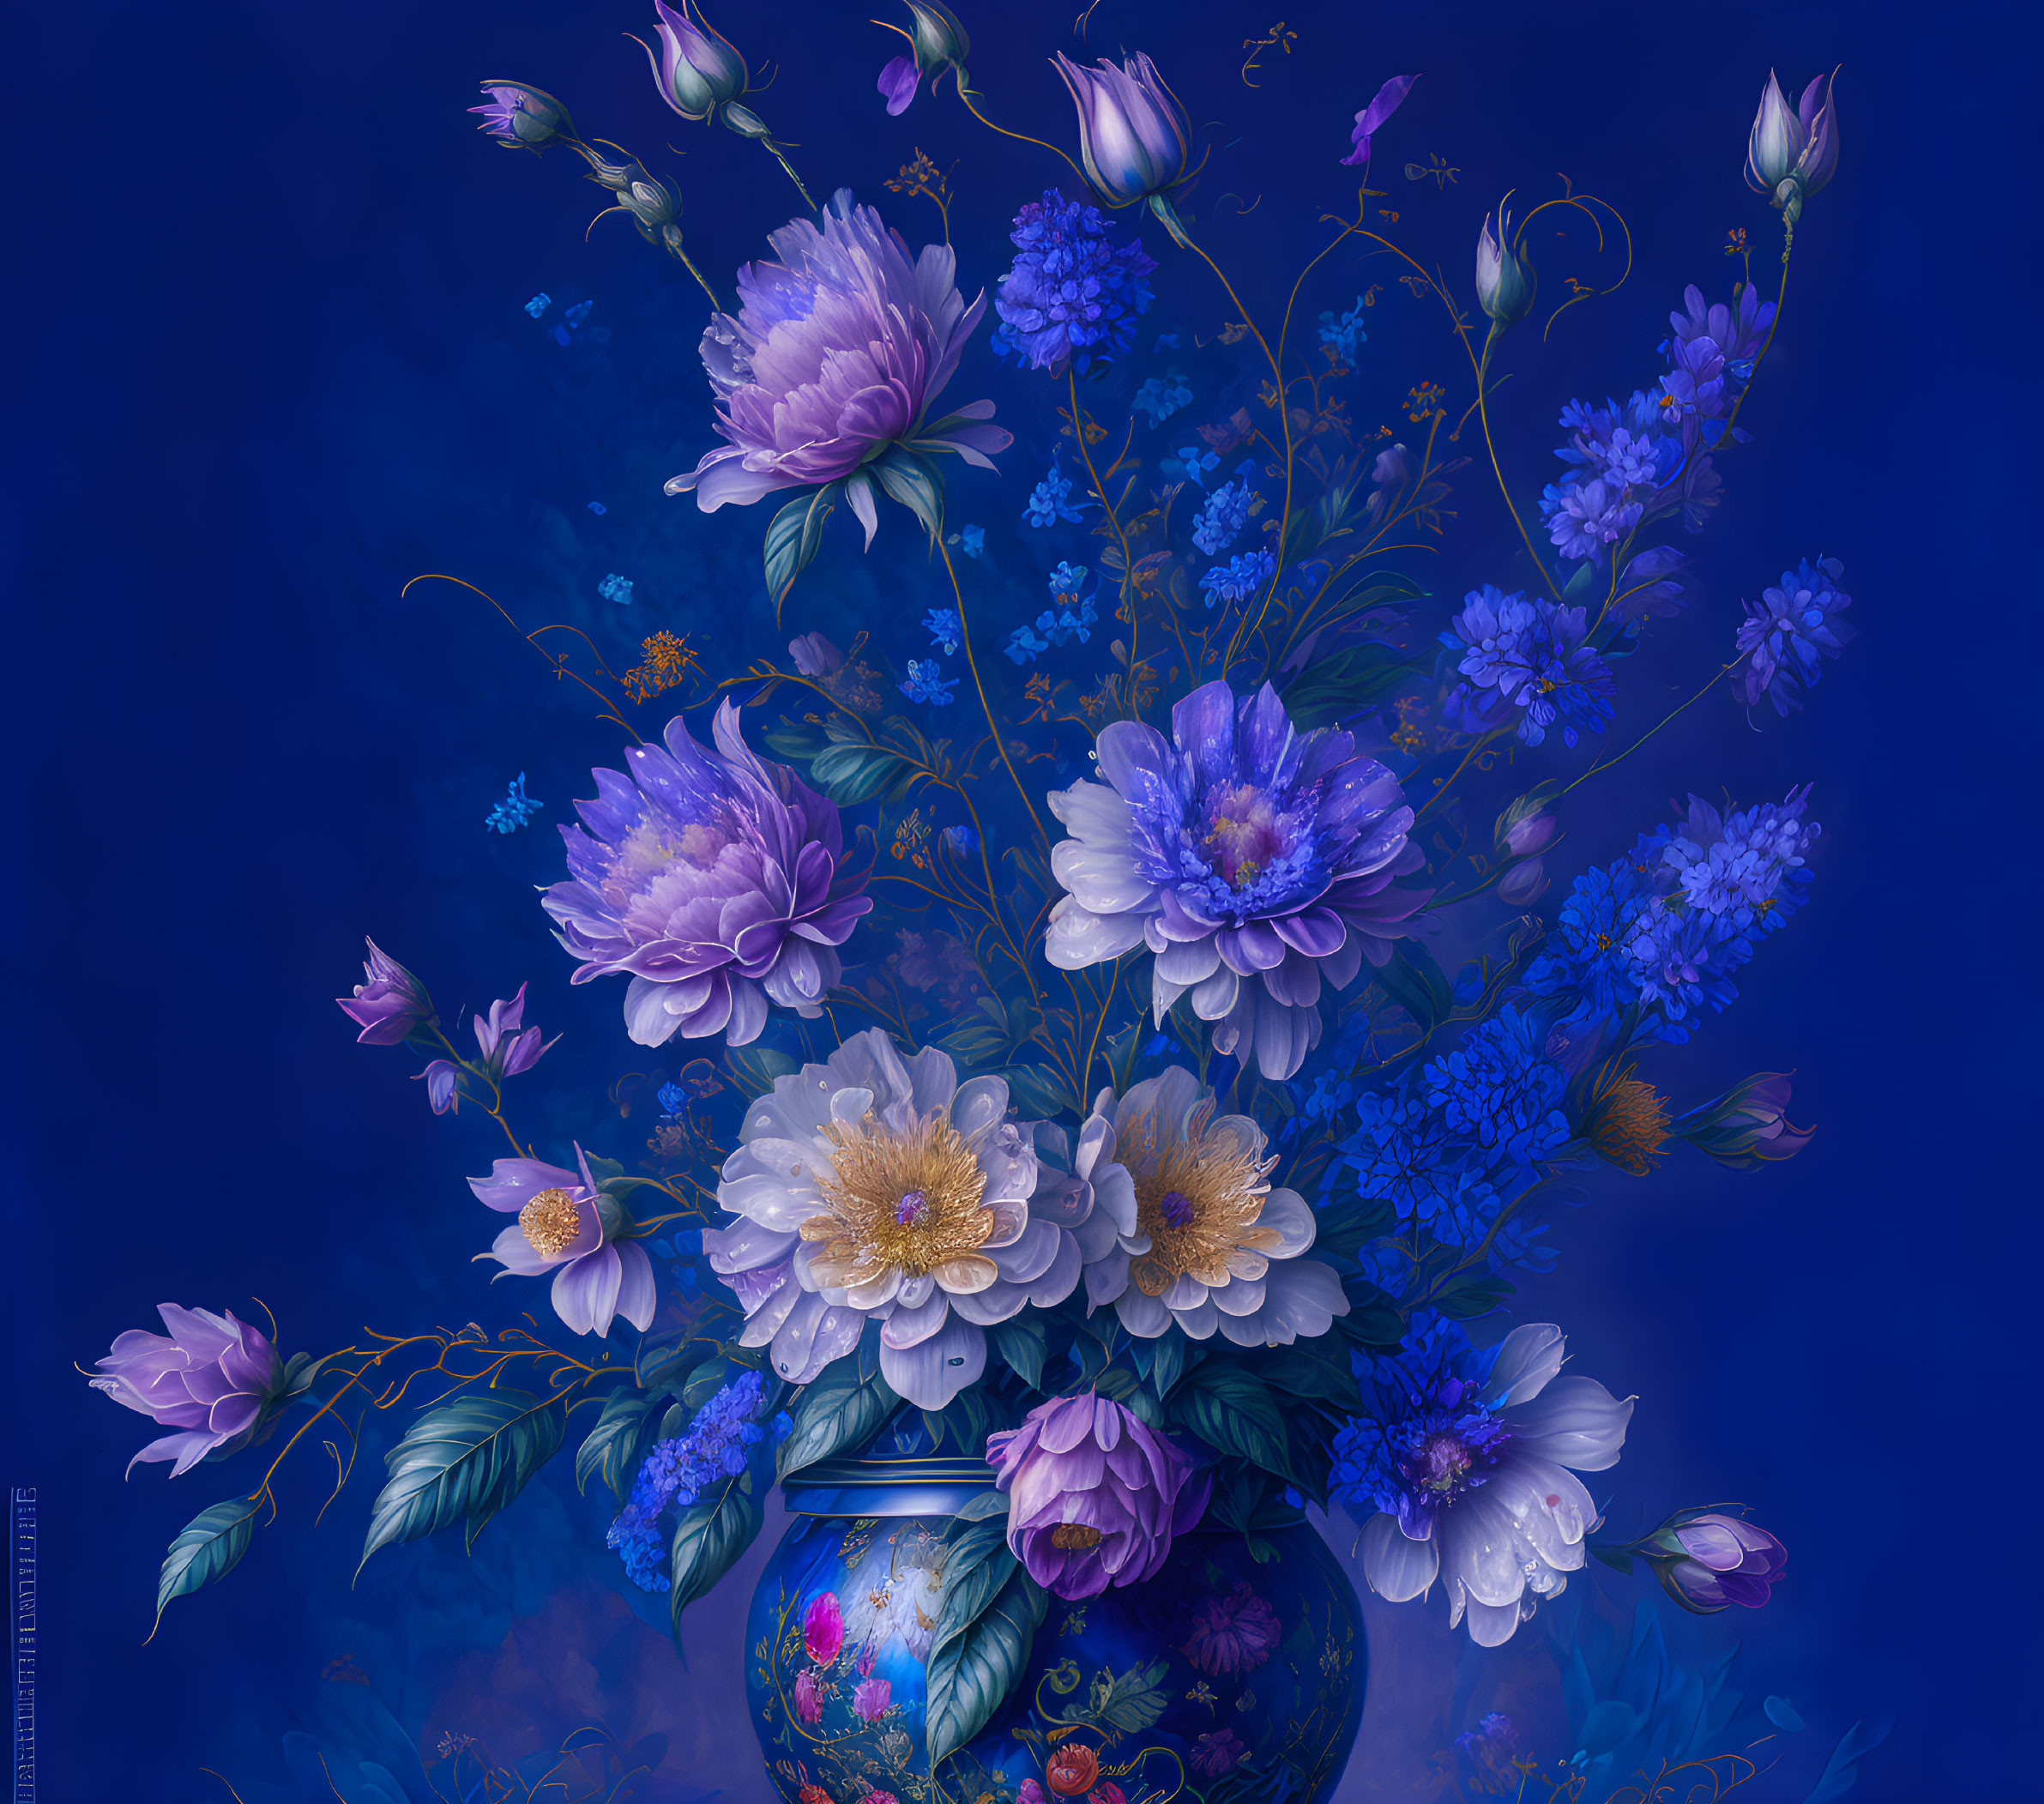 Flowers arrangements in a vase